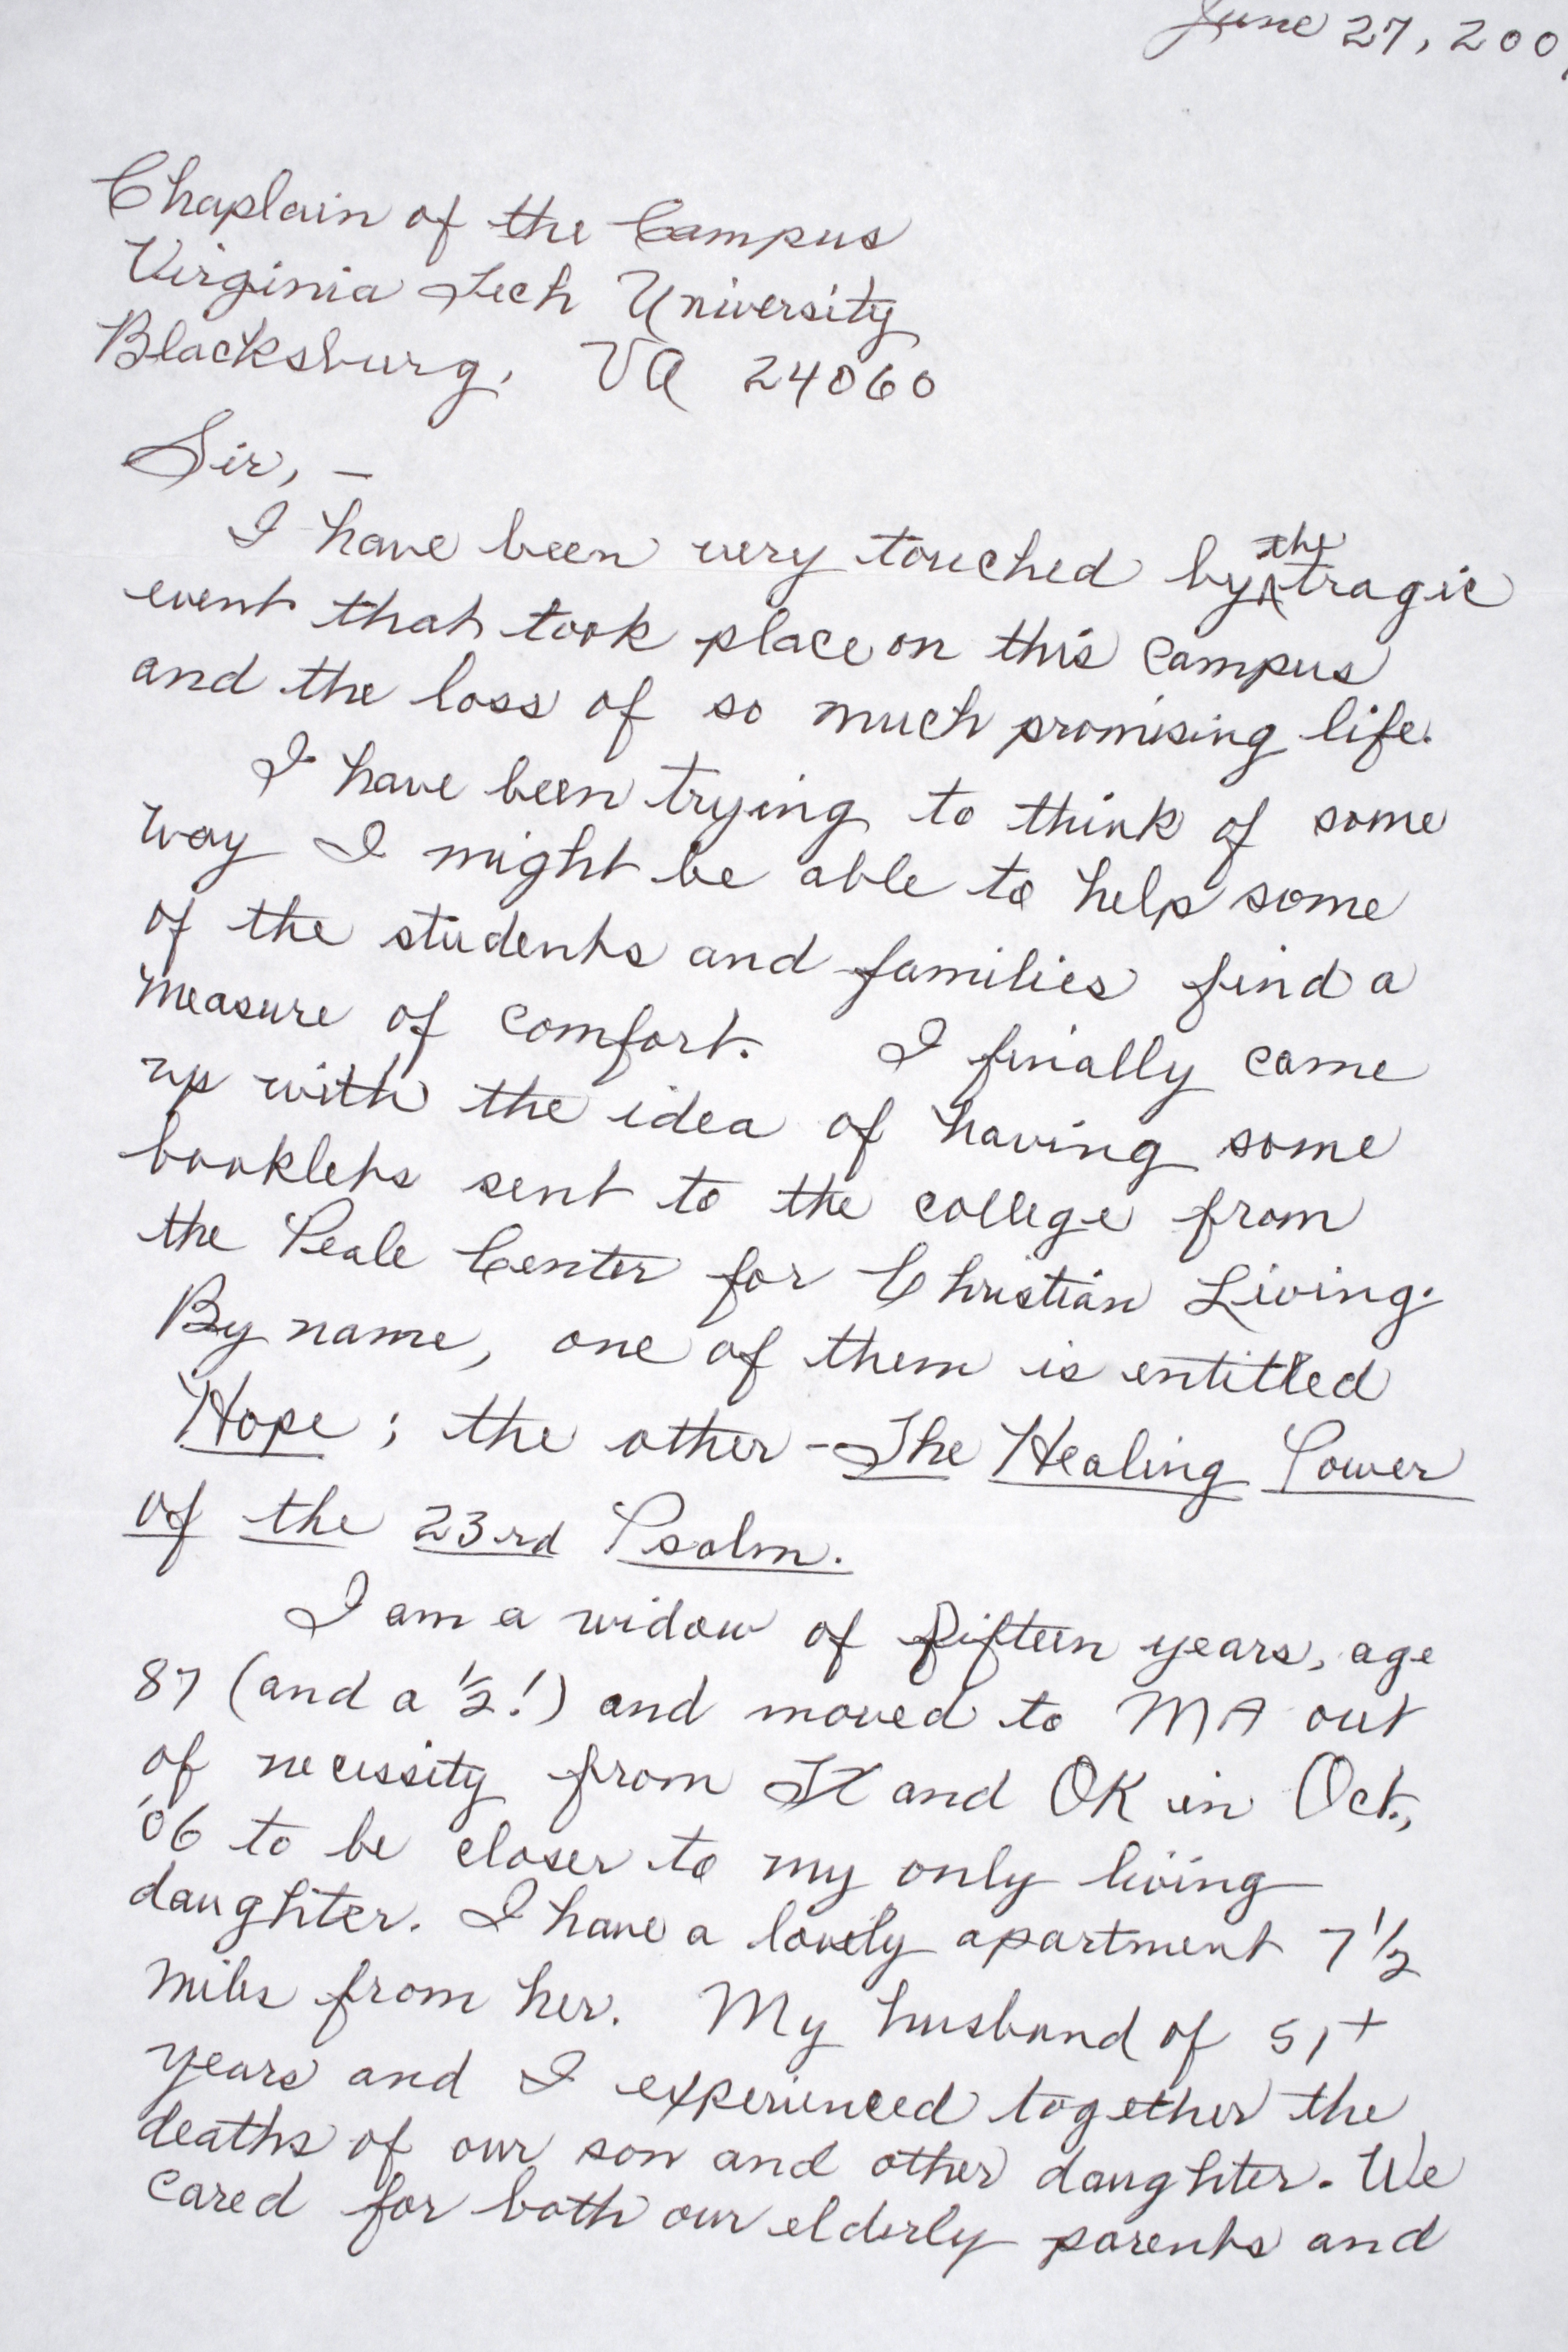 handwritten cover letter examples